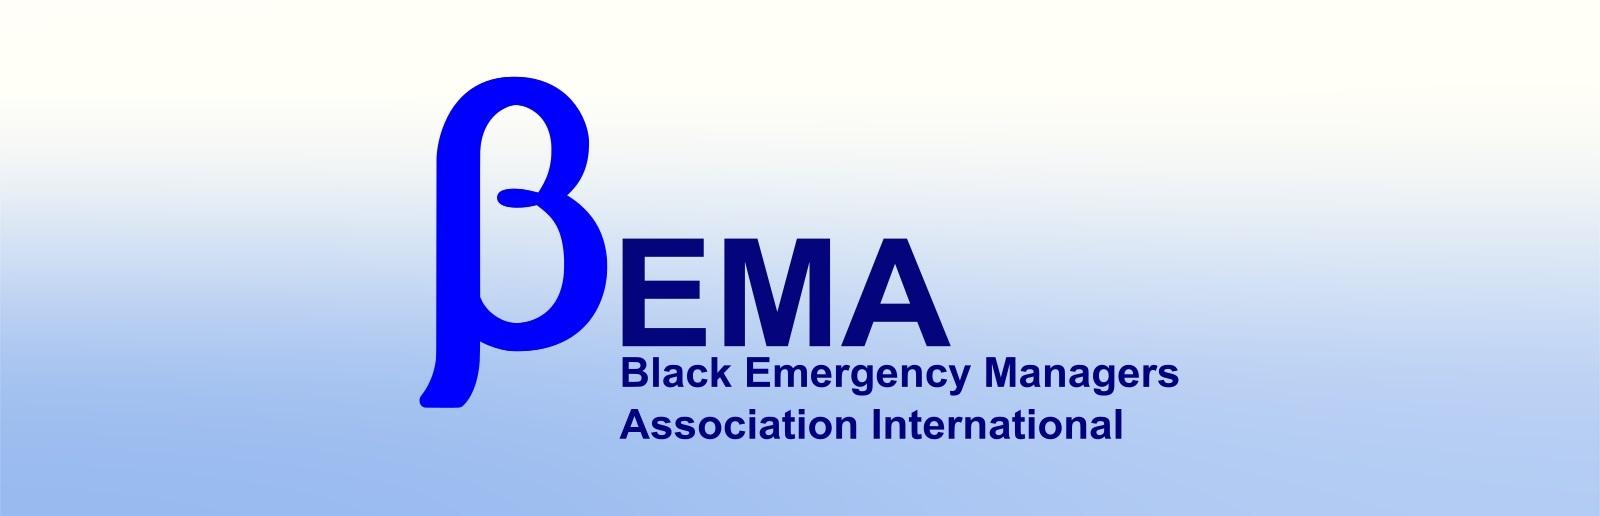 Black Emergency Managers Association - Professional Associations - JobStars USA